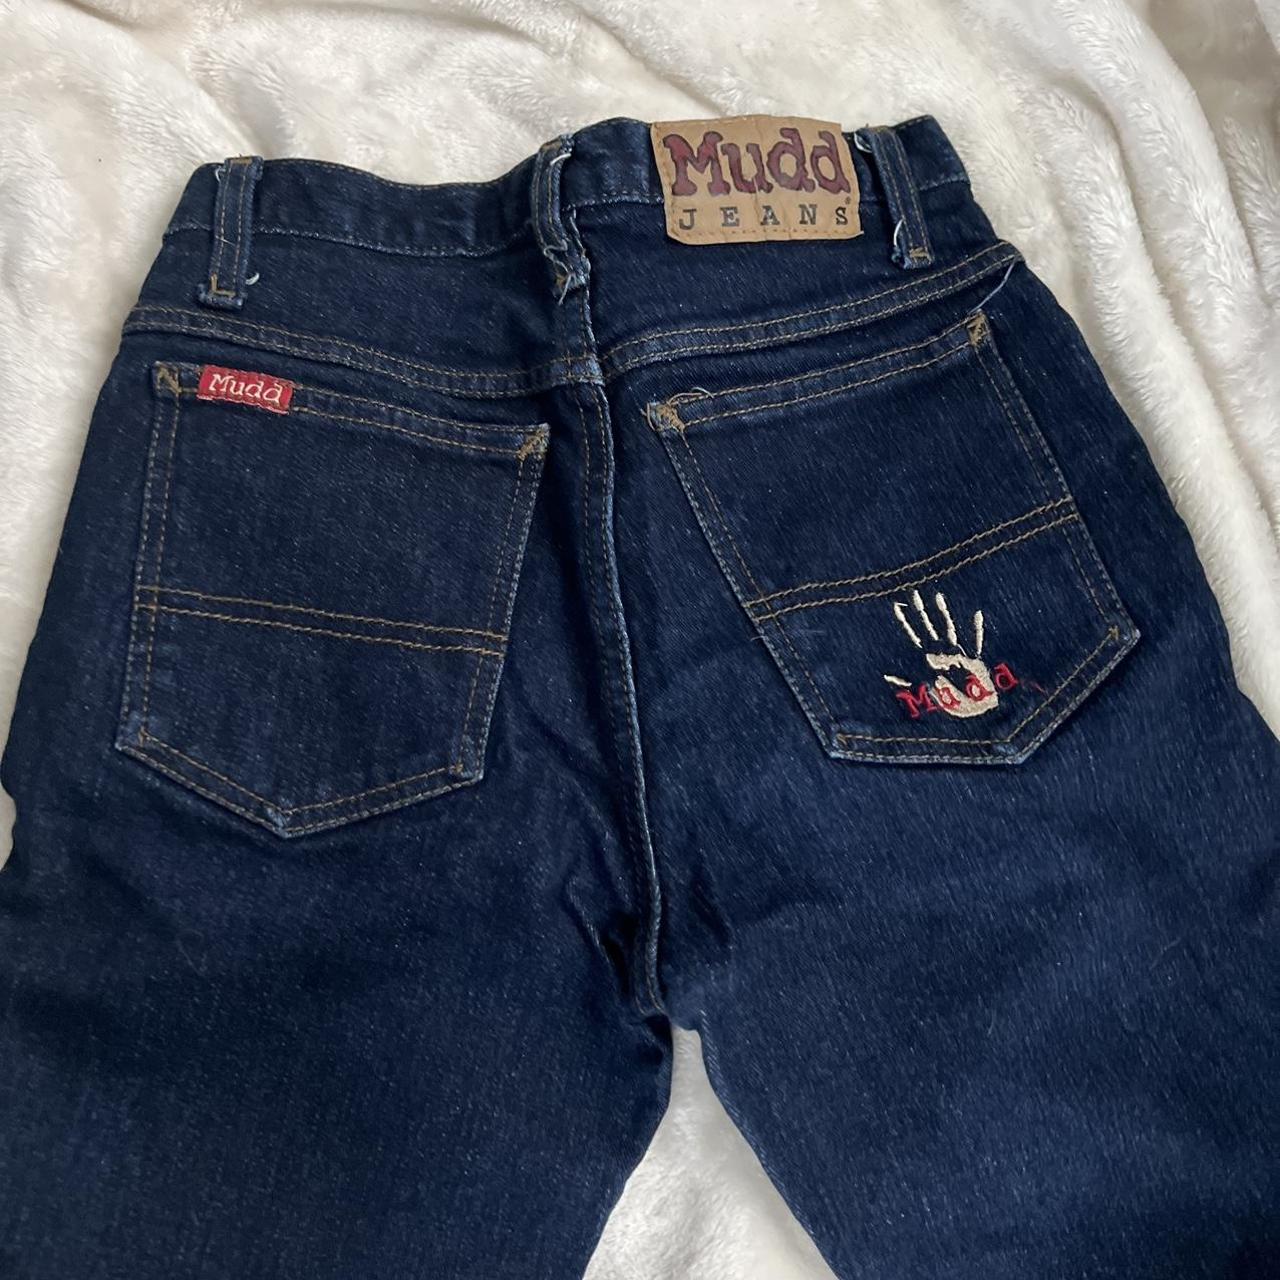 Vintage Mudd jeans Tag size: 1 - Depop